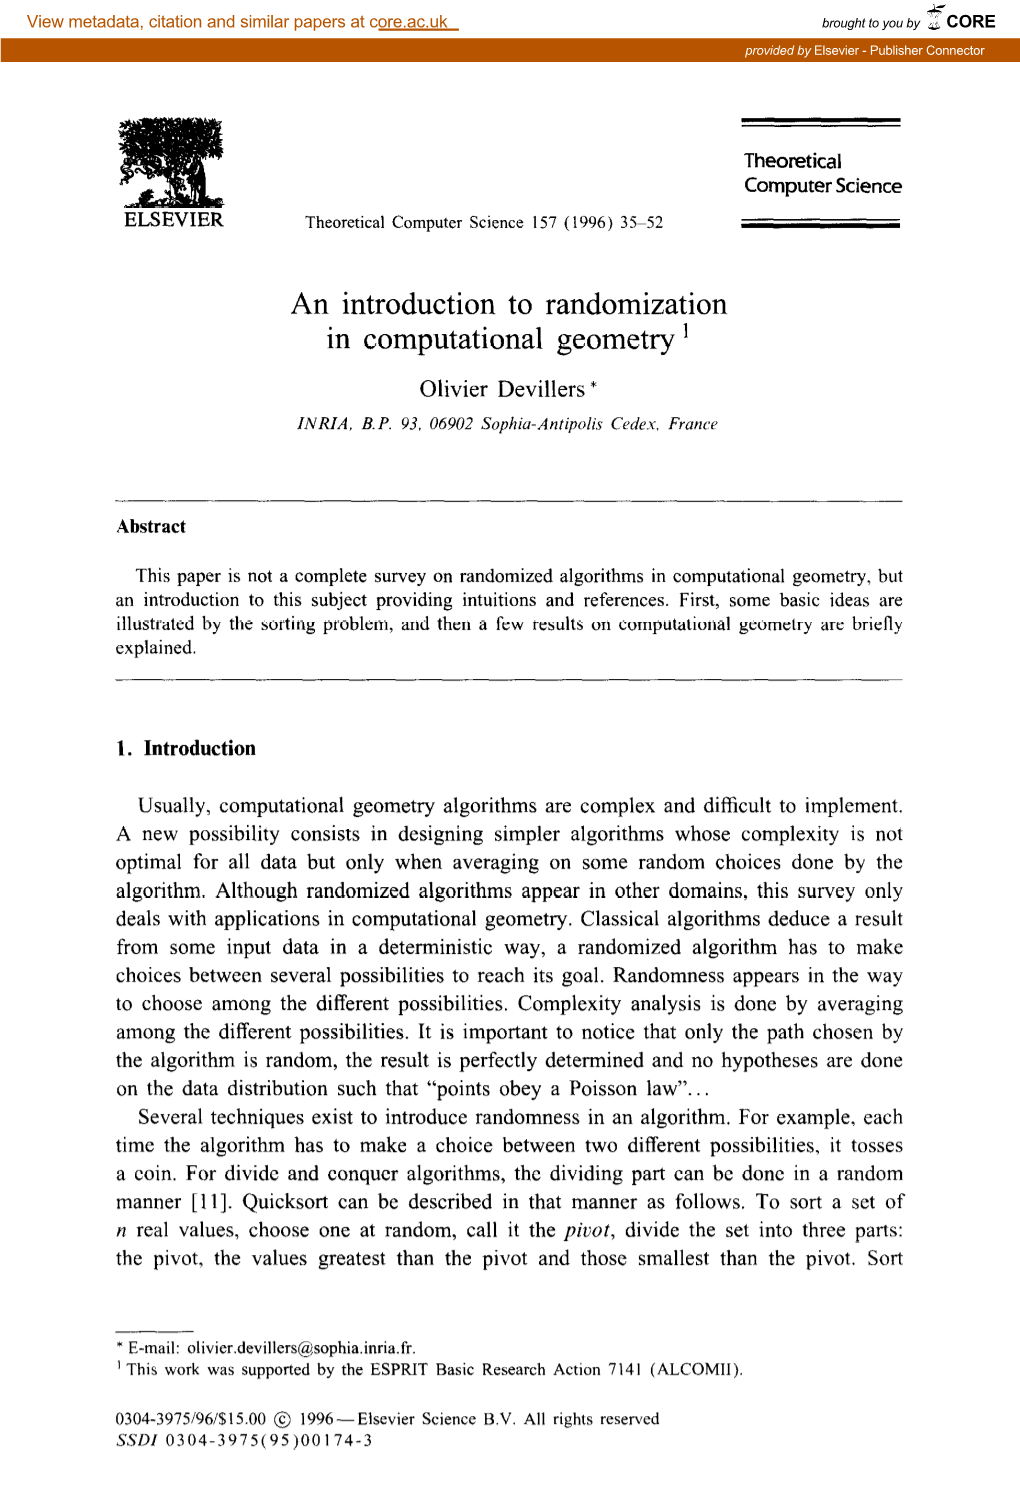 An Introduction to Randomization in Computational Geometry I